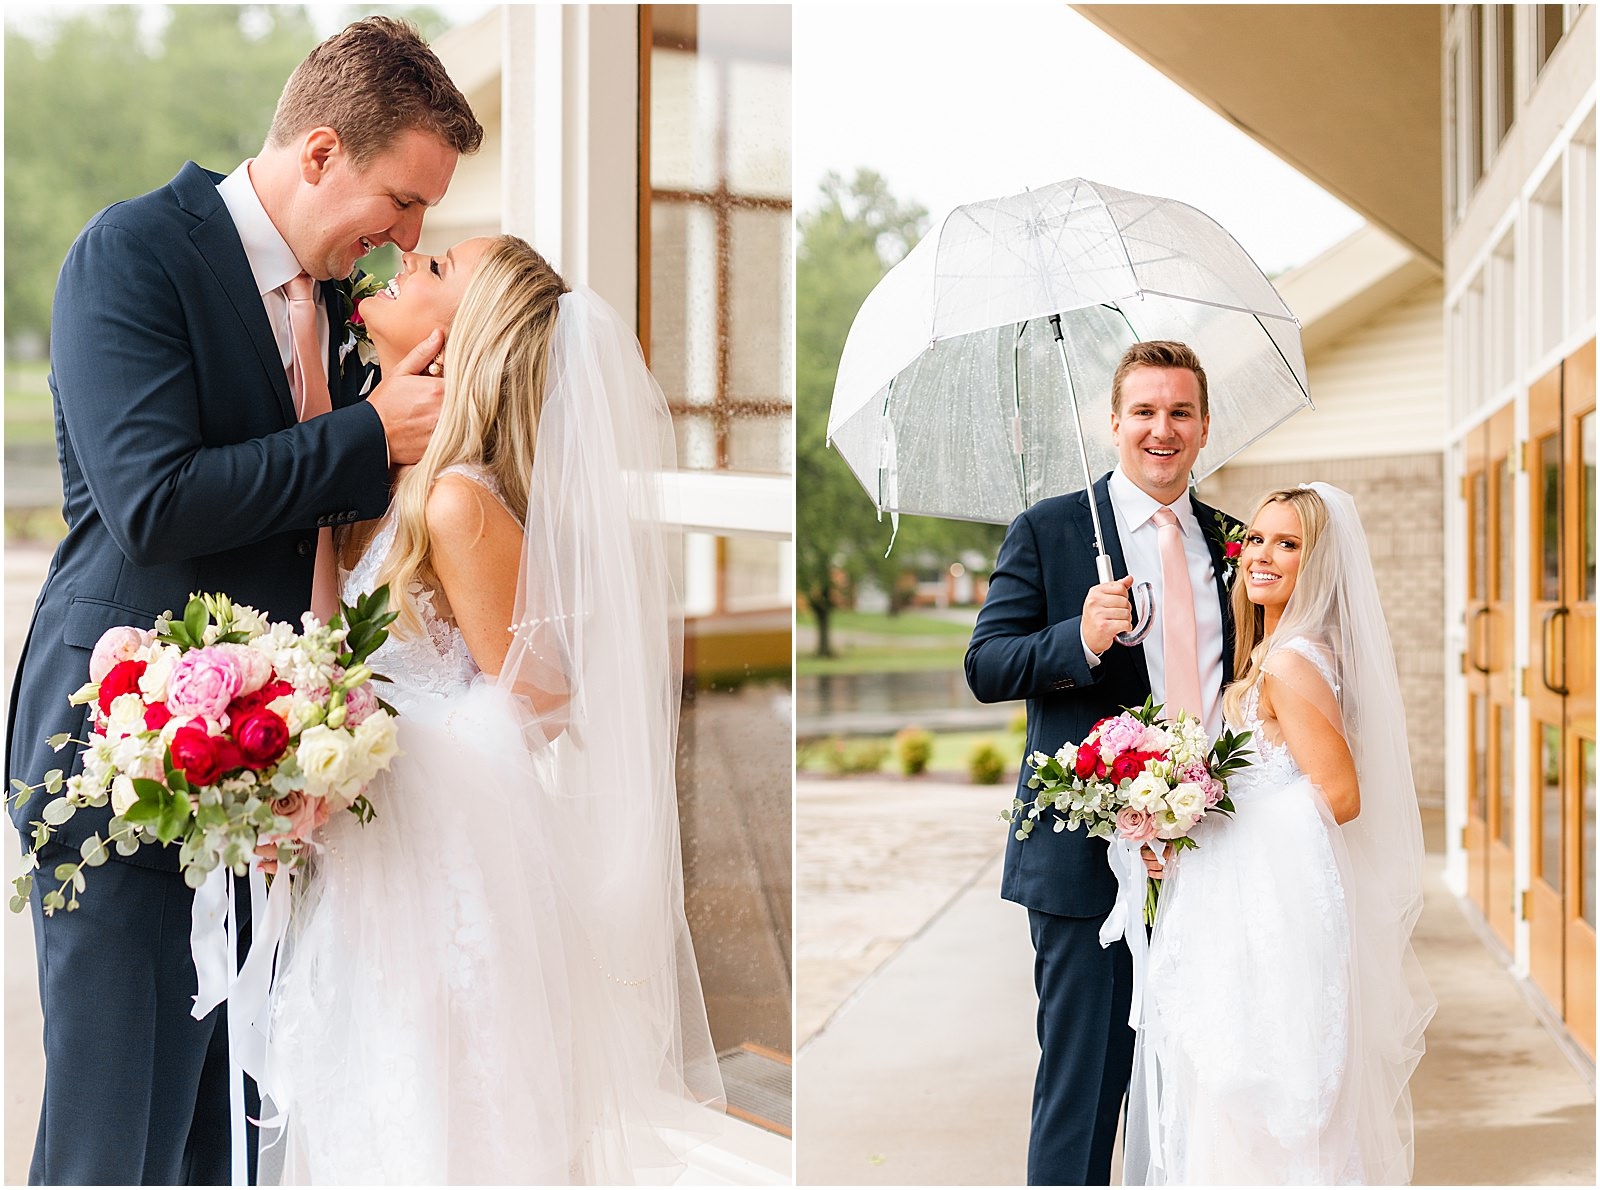 An Evansville Country Club Wedding | Madison and Christiaan | Bret and Brandie | Evansville Photographers | @bretandbrandie-0141.jpg